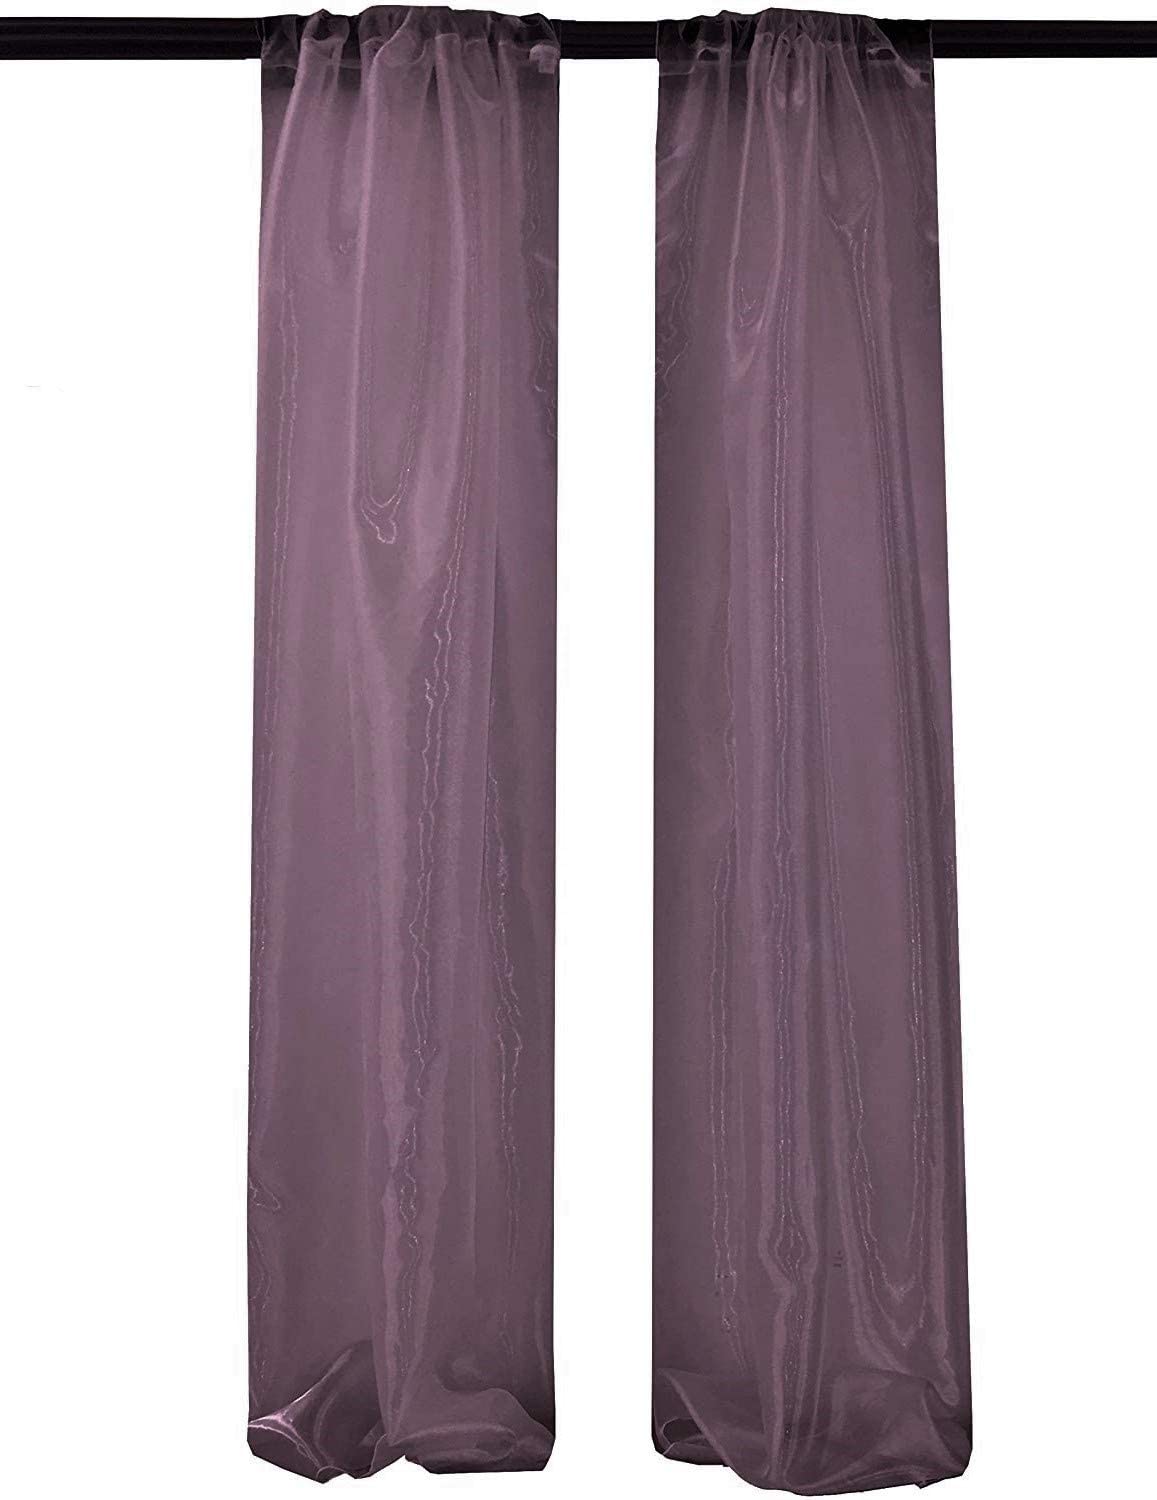 100% Polyester Sheer Mirror Organza Backdrop Drape, Curtain Panels, Room Divider, 1 Pair (Eggplant,